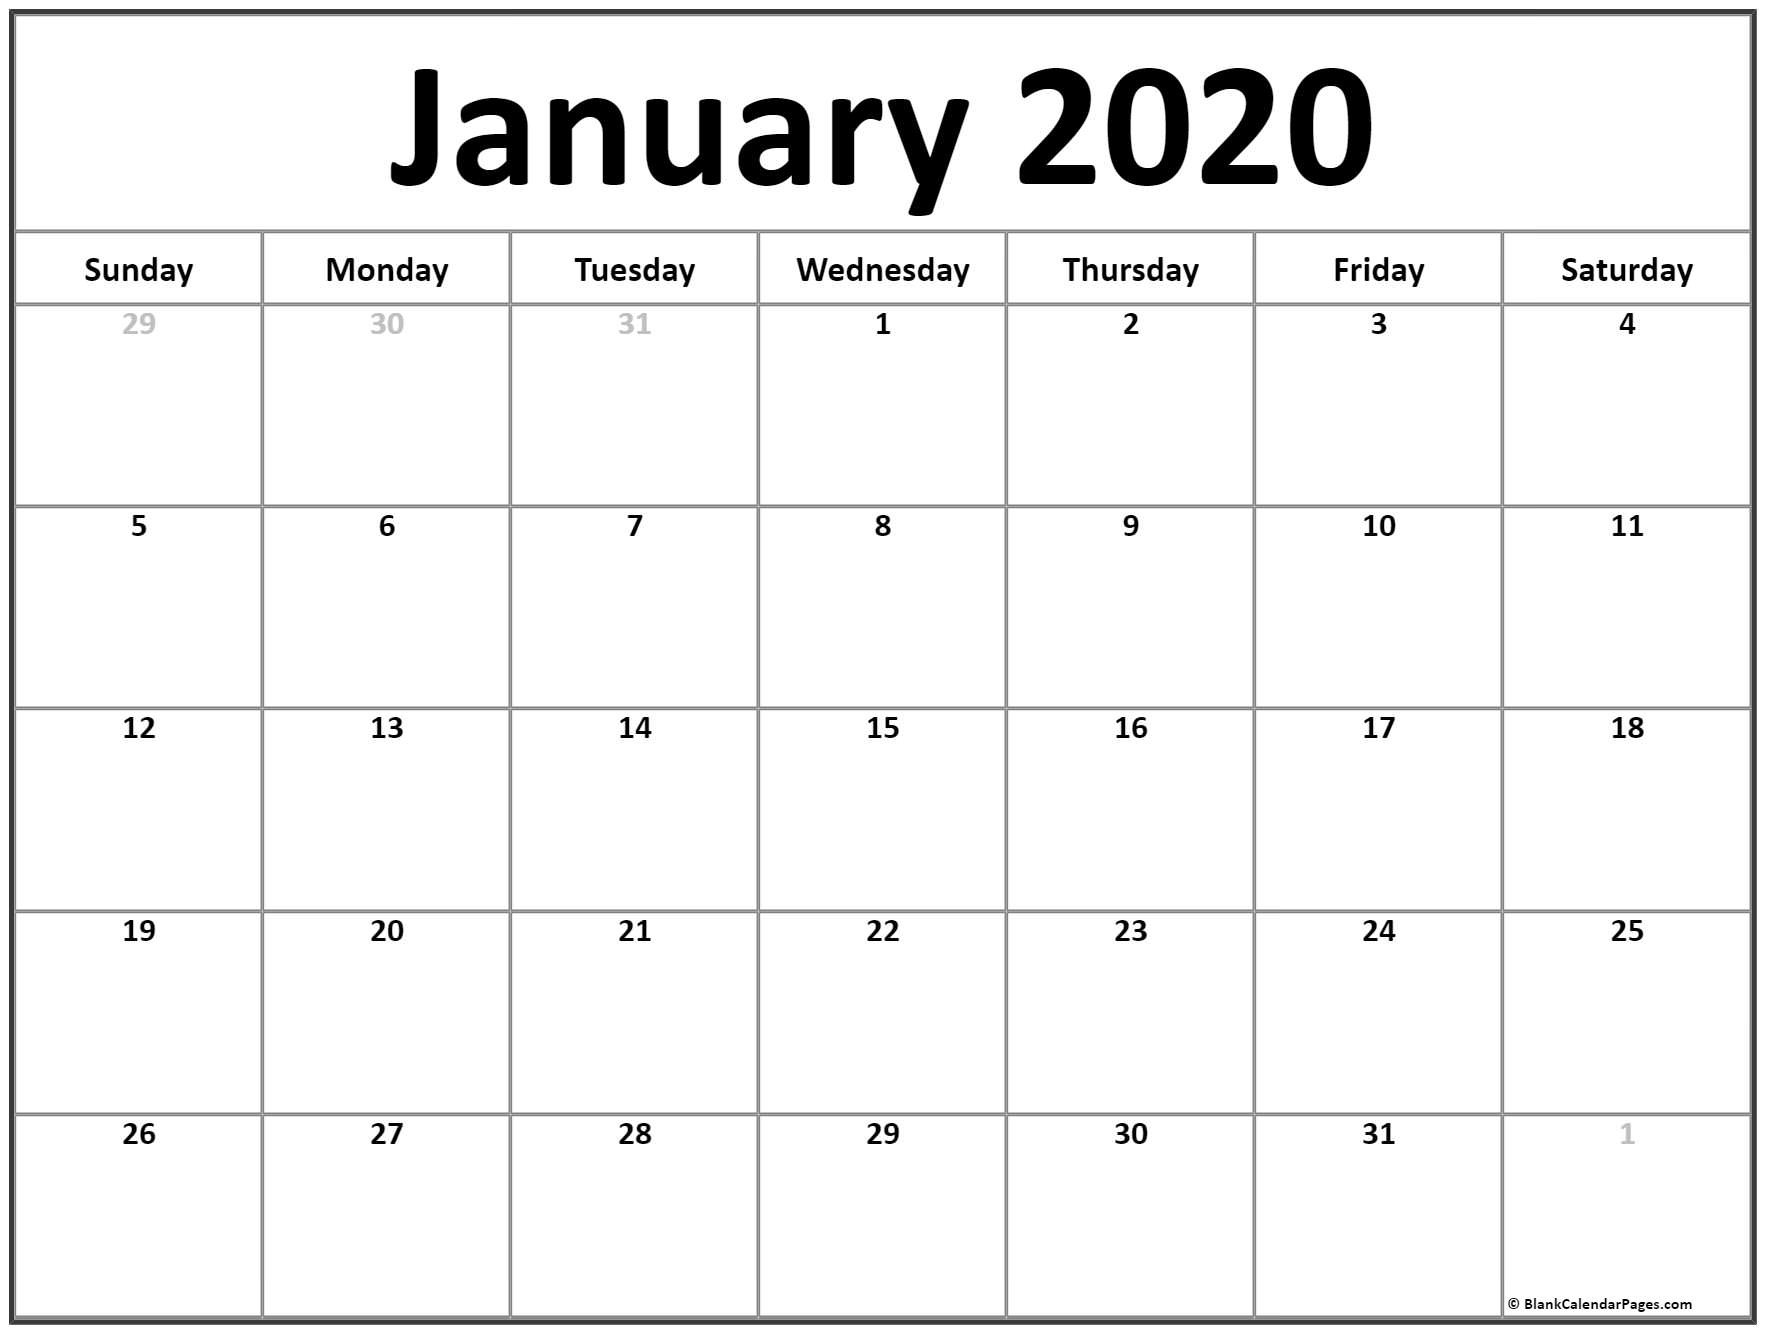 January 2020 Calendar | Free Printable Monthly Calendars-January Calendar Of 2020